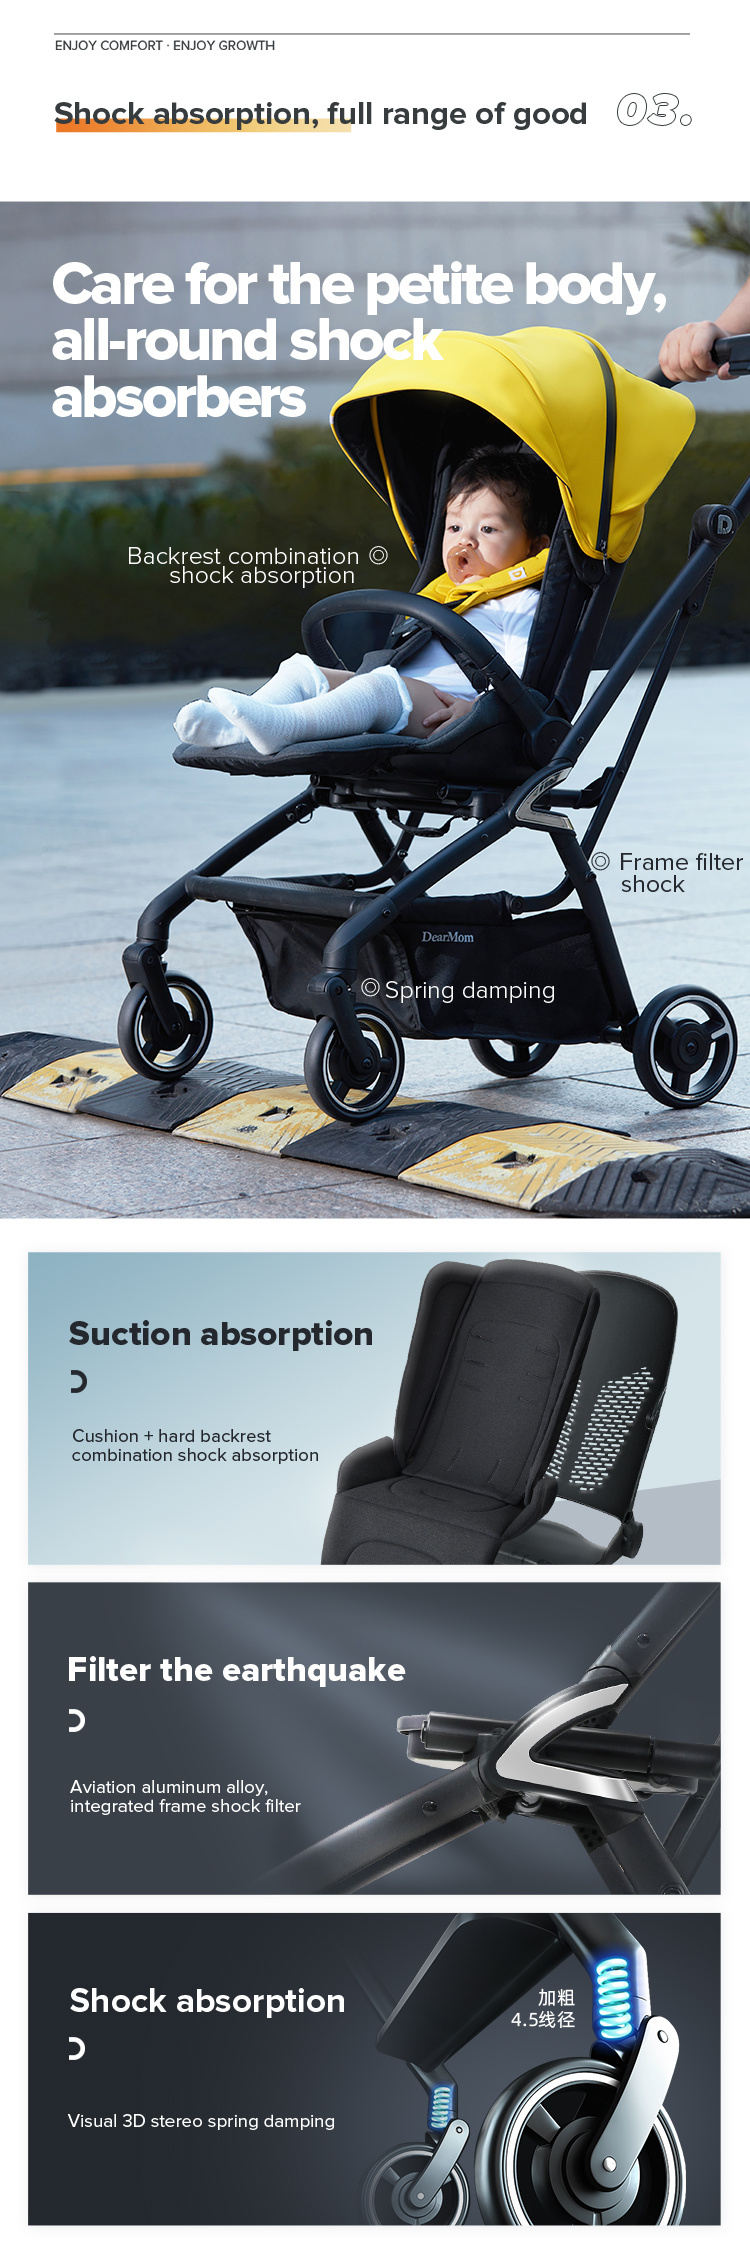 DearMom A7 easy to fold in a baby stroller